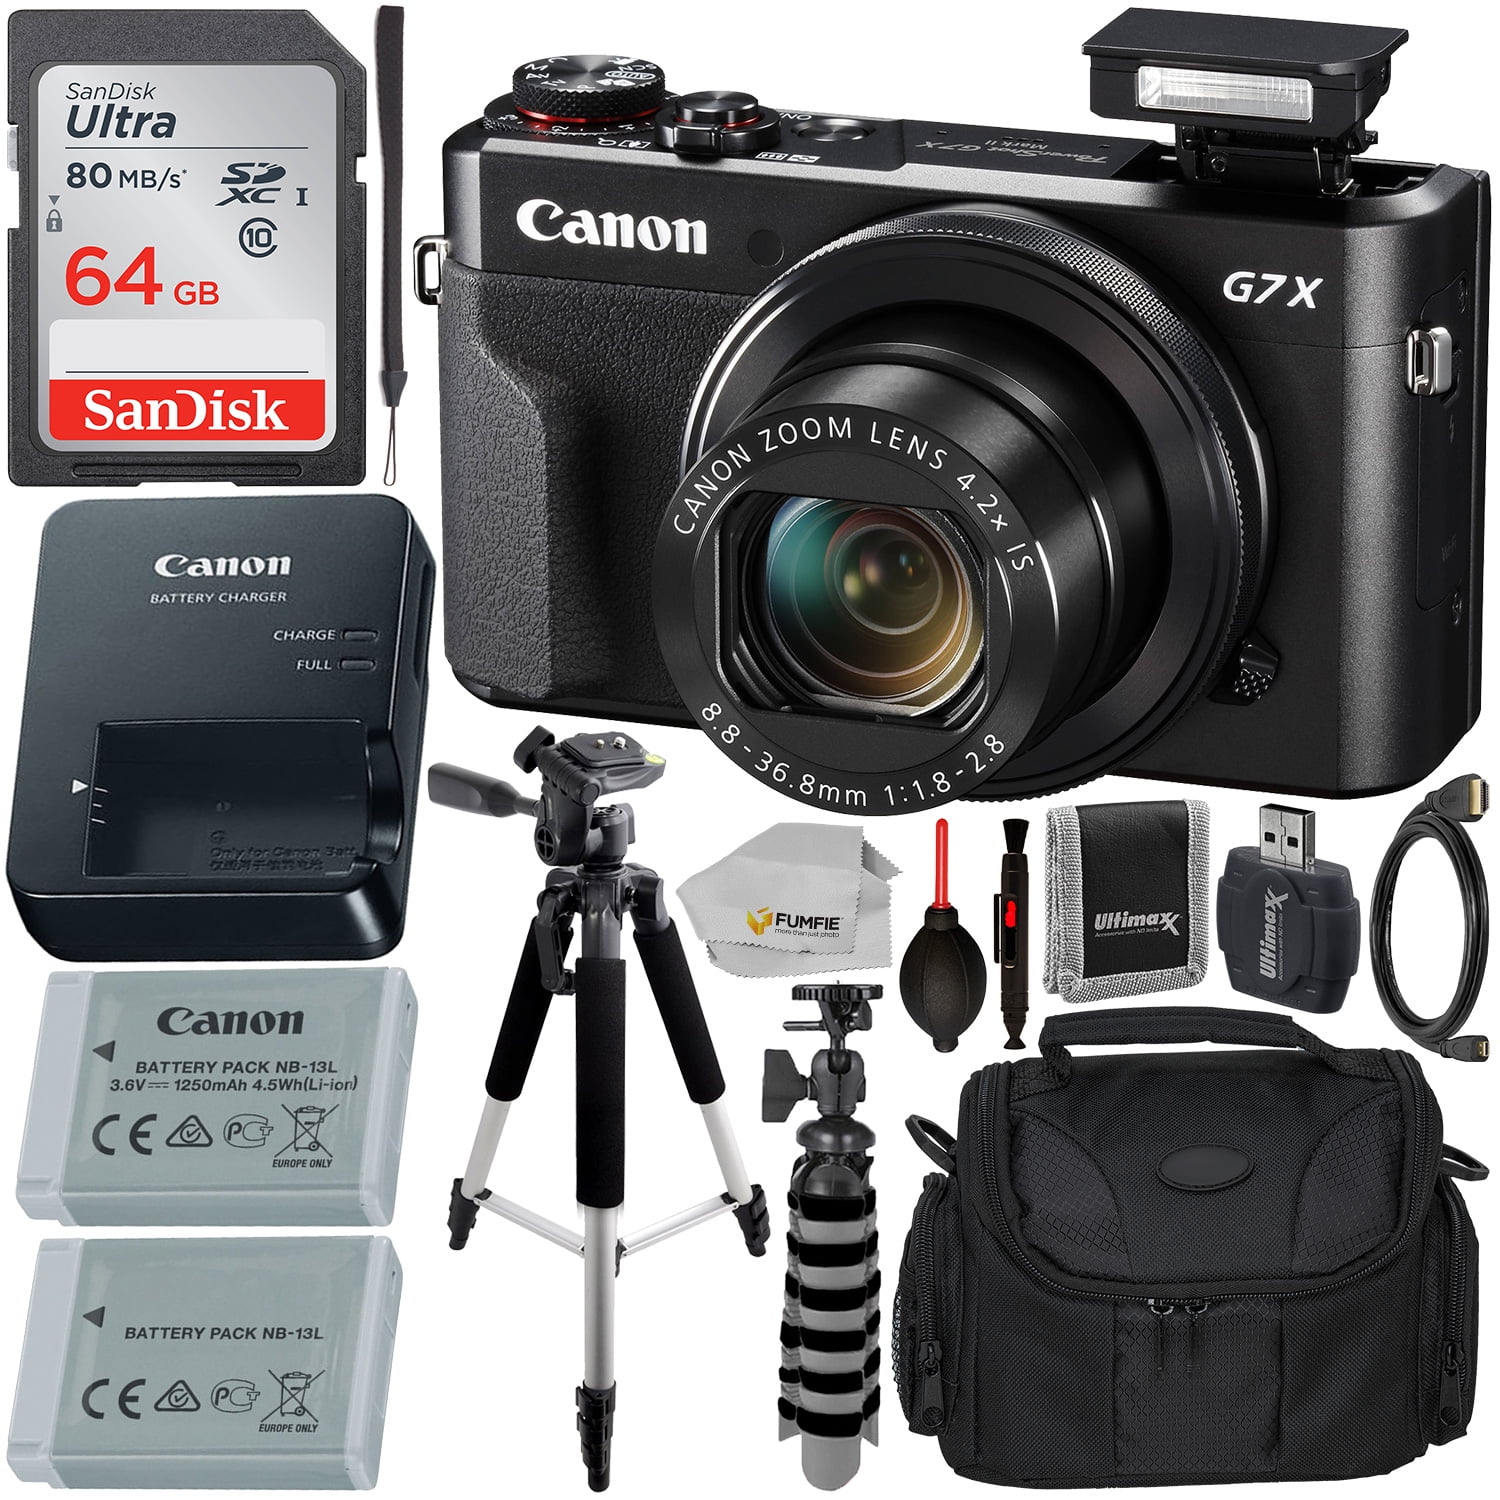 Canon PowerShot G7 X Mark II Digital Camera (Black) with Essential